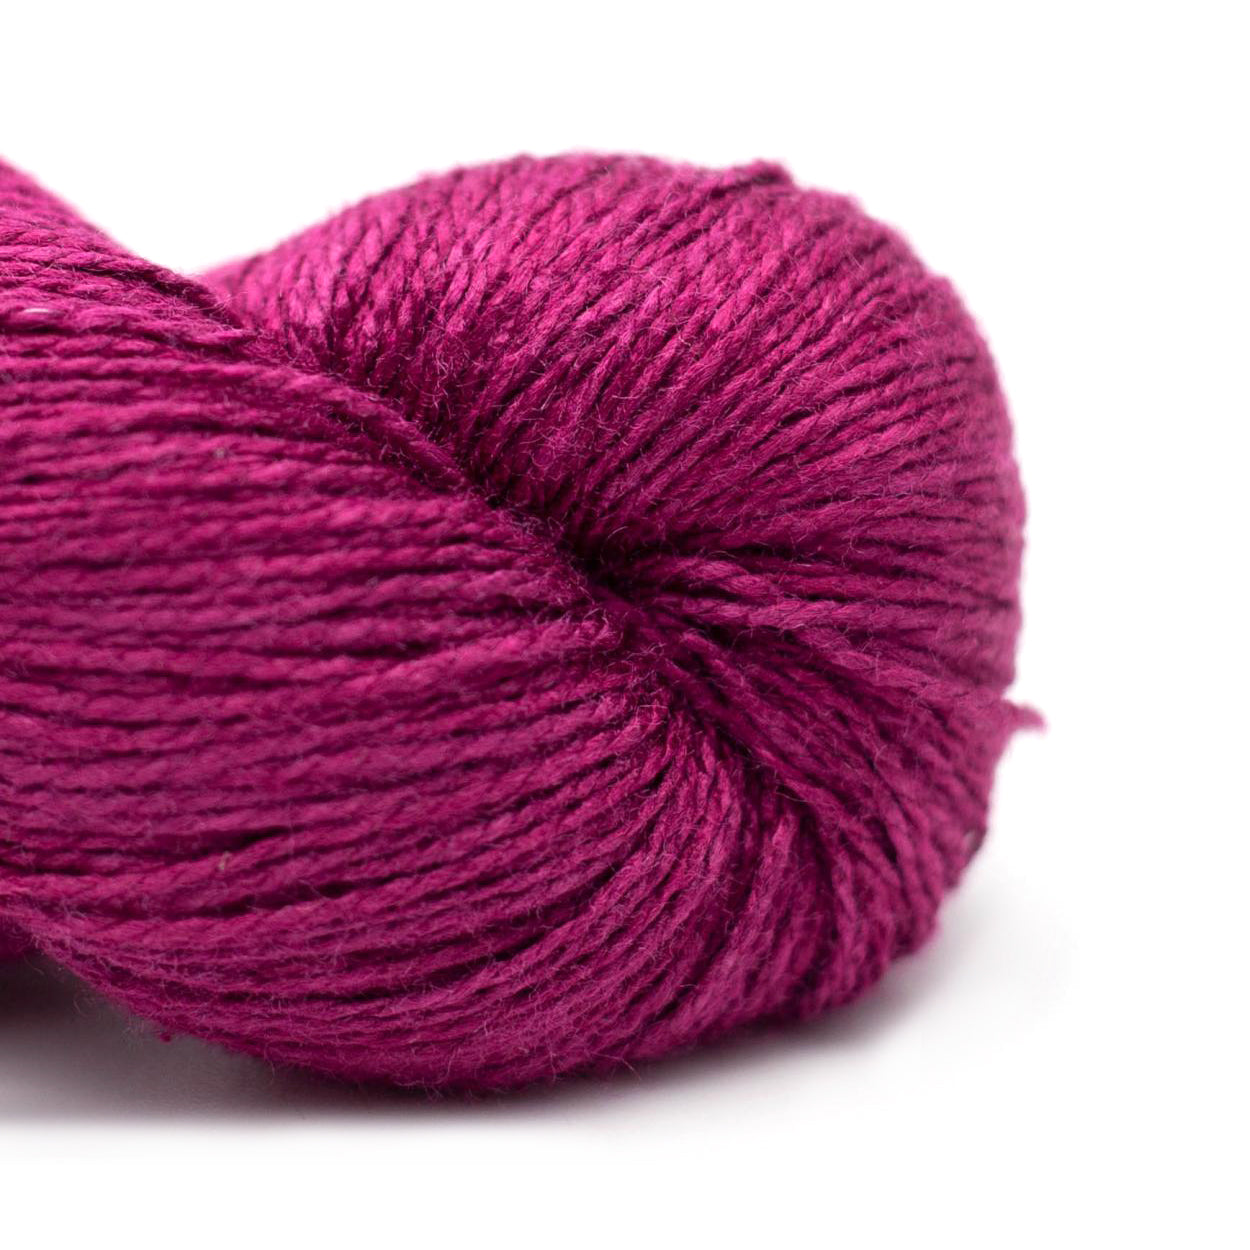 Purple Orchid* Gradient yarn 75/25 Merino/Silk - Fingering - hand